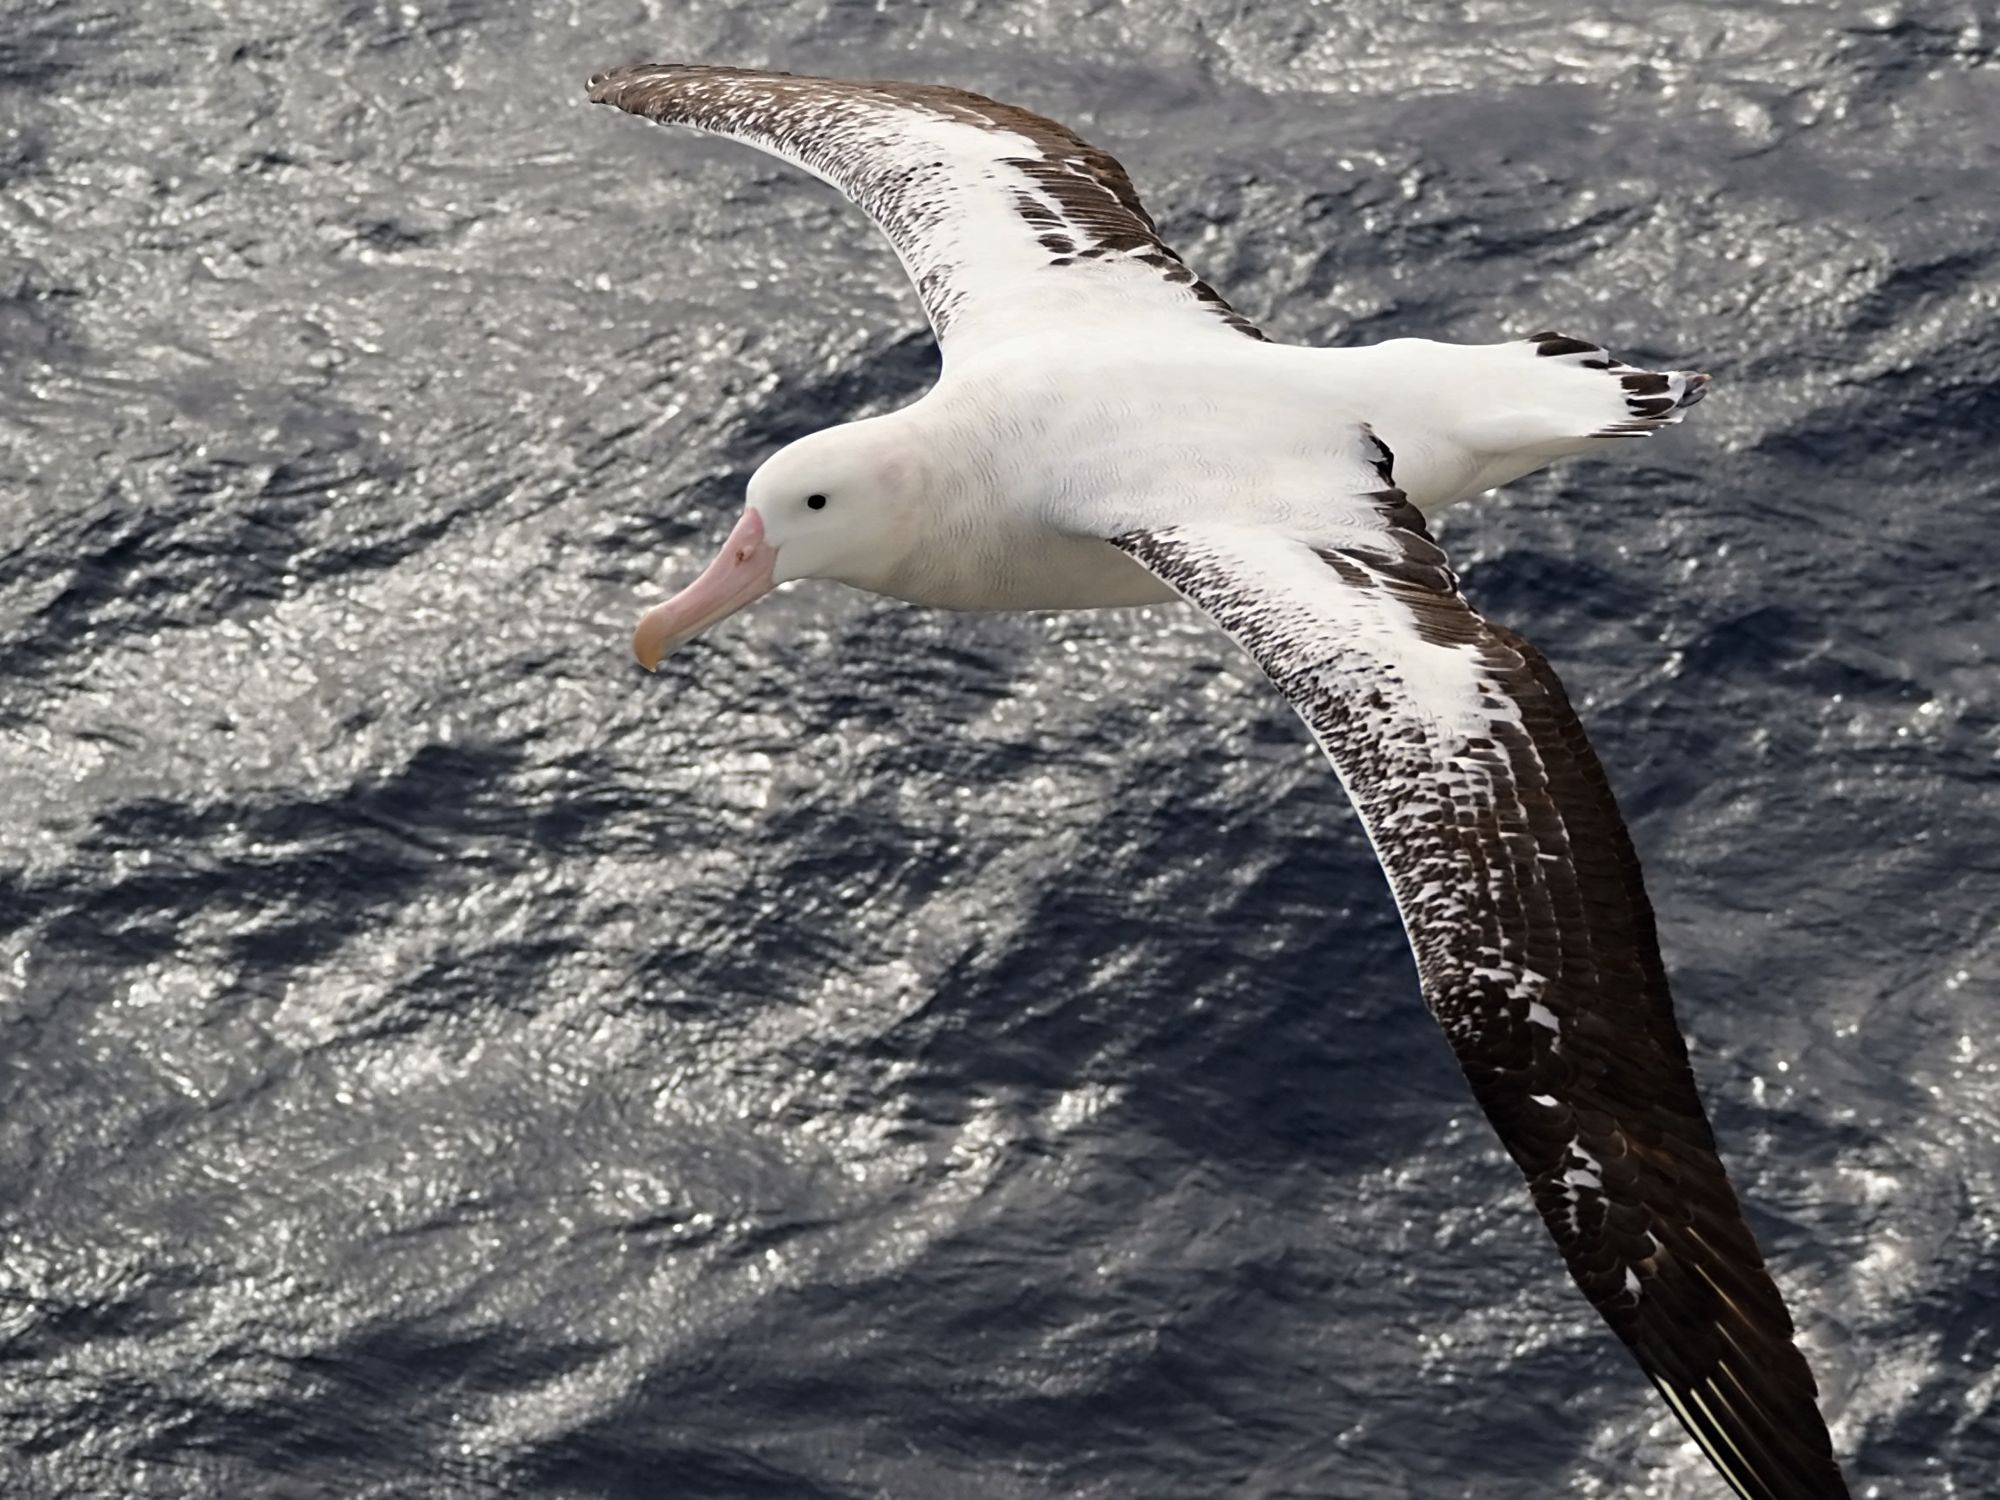 Albatross coming in for a look